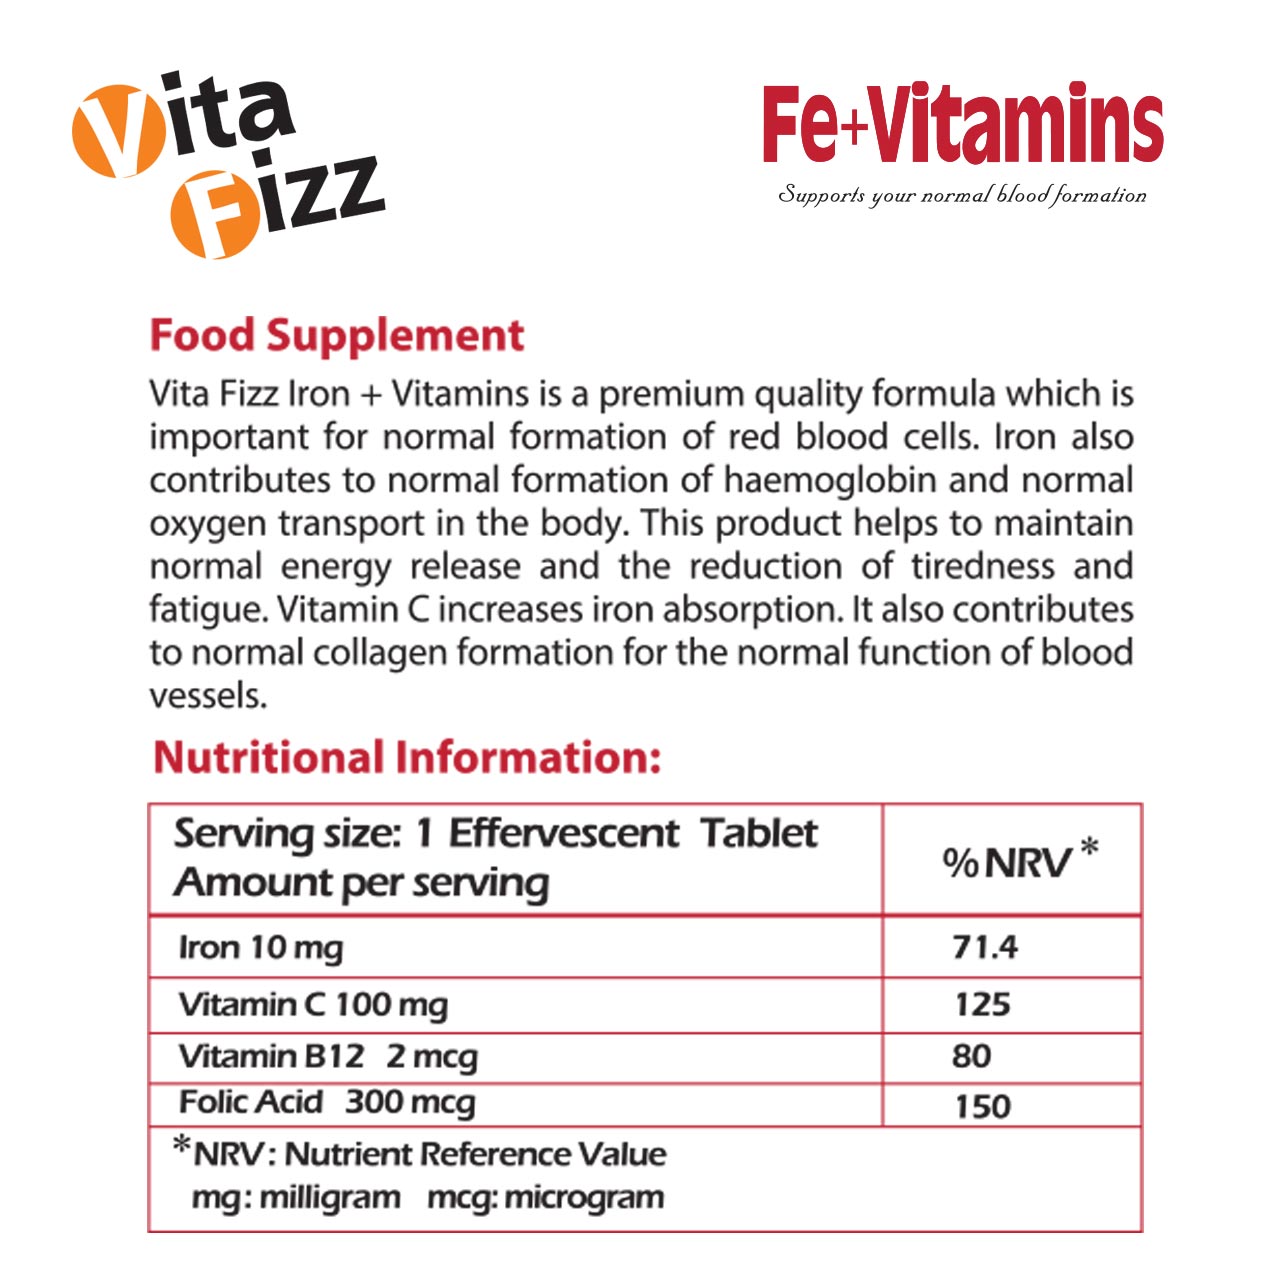 Fe+Vitamins facts